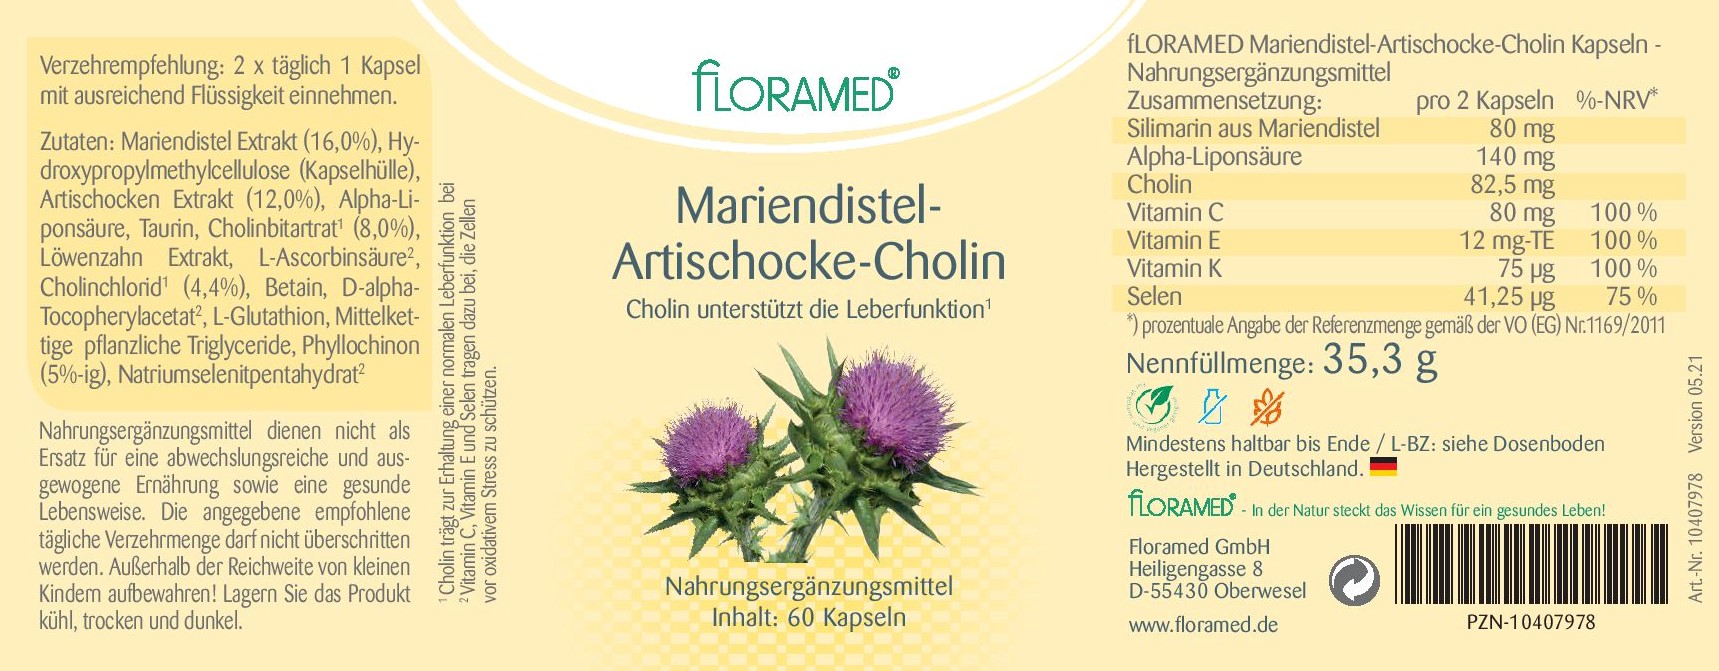 Floramed Mariendistel-Artischocke-Cholin